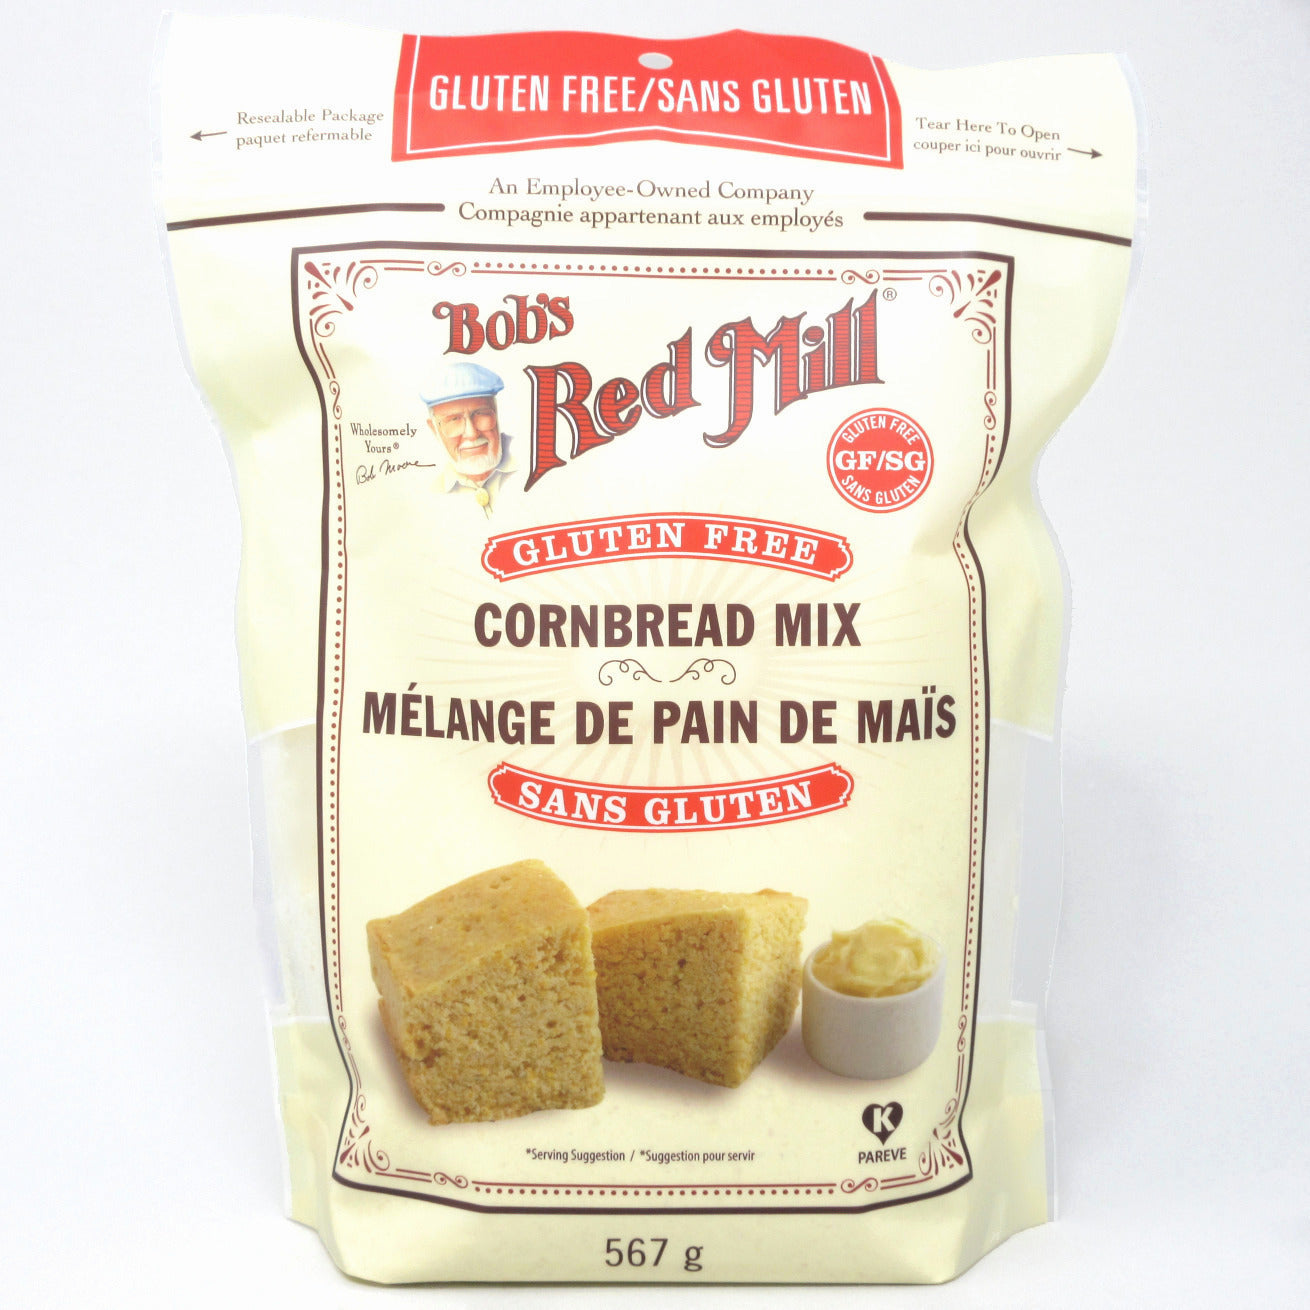 Flour Barrel product image - Bob's Red Mill Gluten Free Cornbread Mix